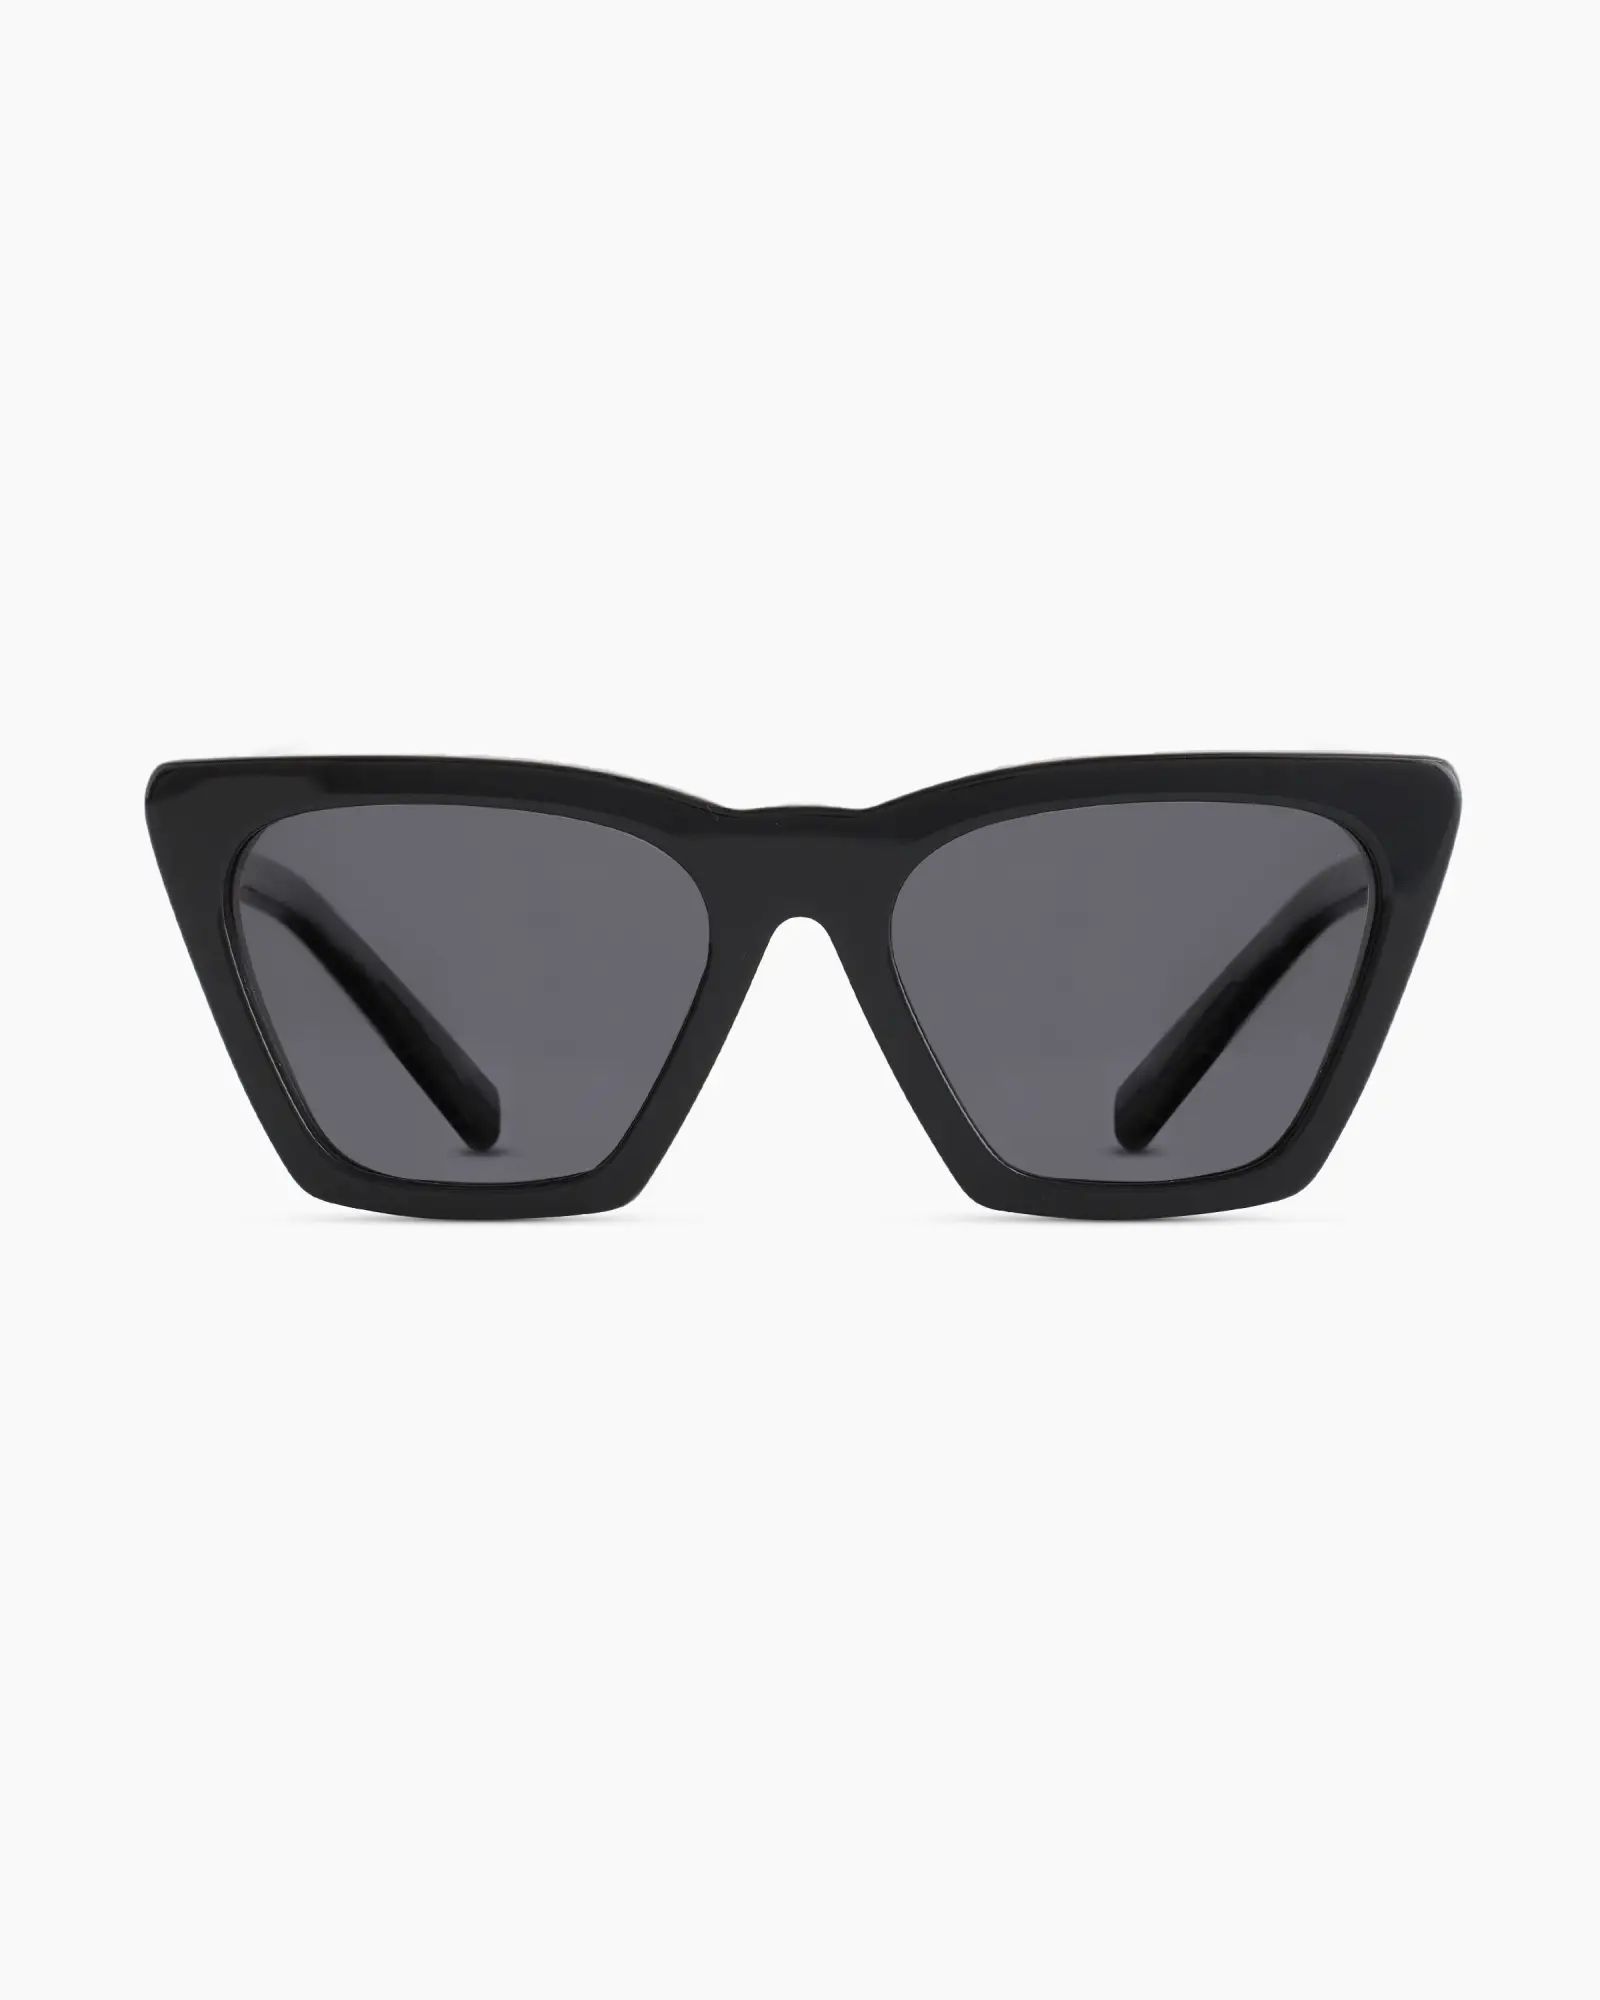 Andy Polarized Acetat Sunglasses | Quince